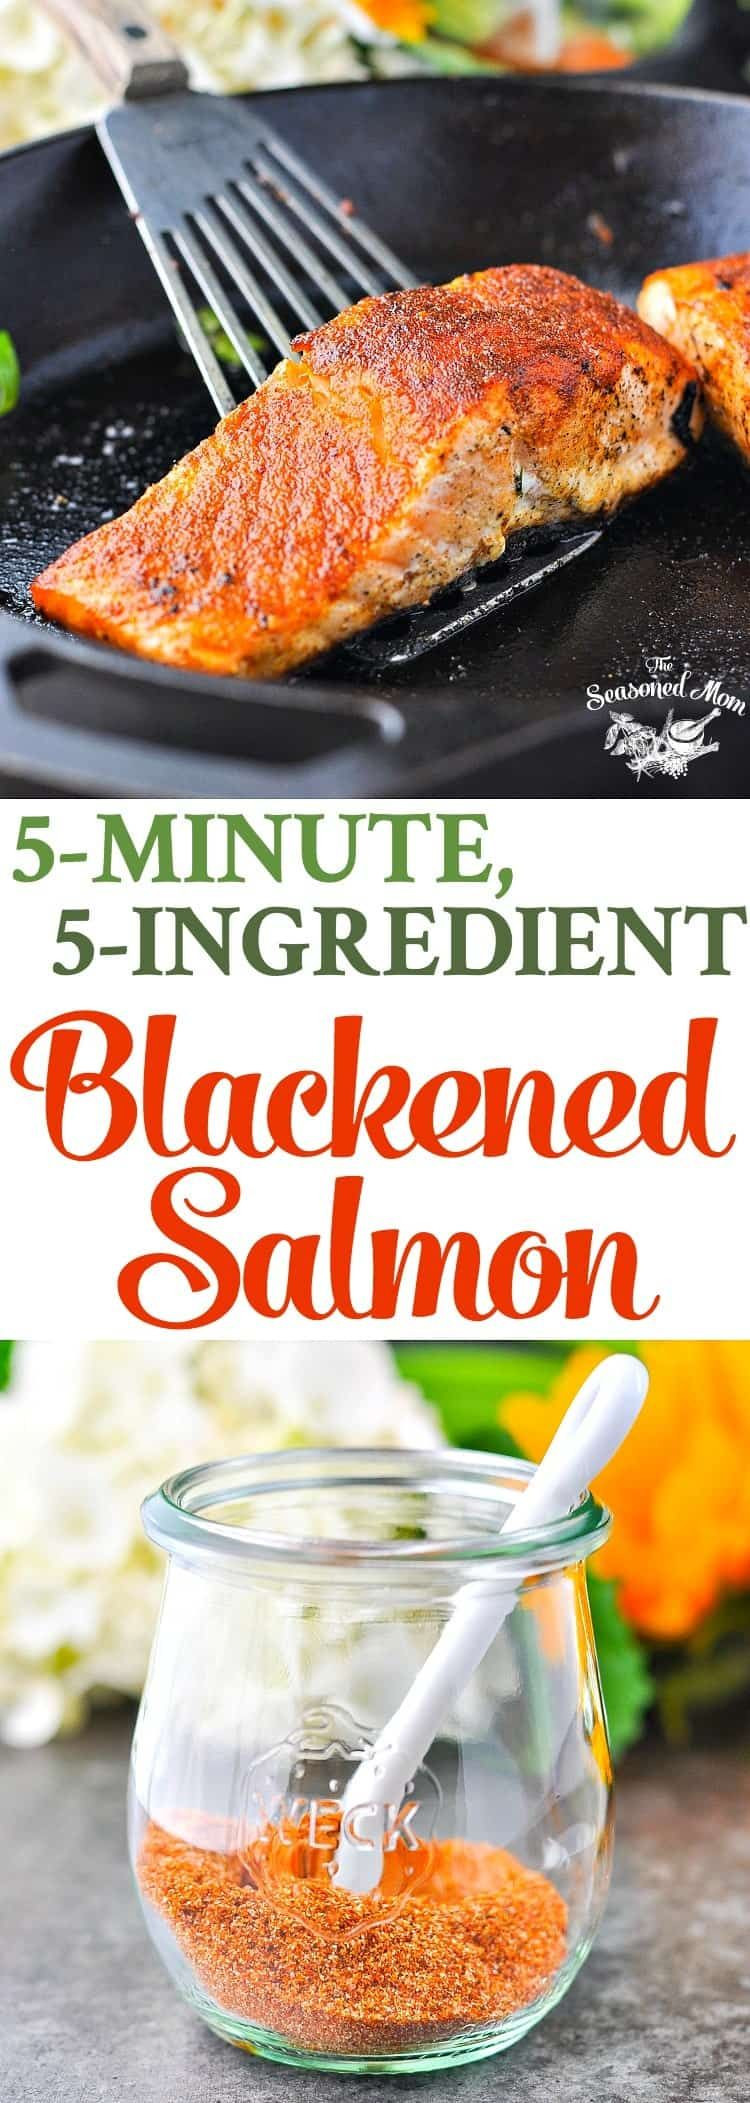 Low Cholesterol Salmon Recipes
 5 Ingre nt Blackened Salmon Recipe